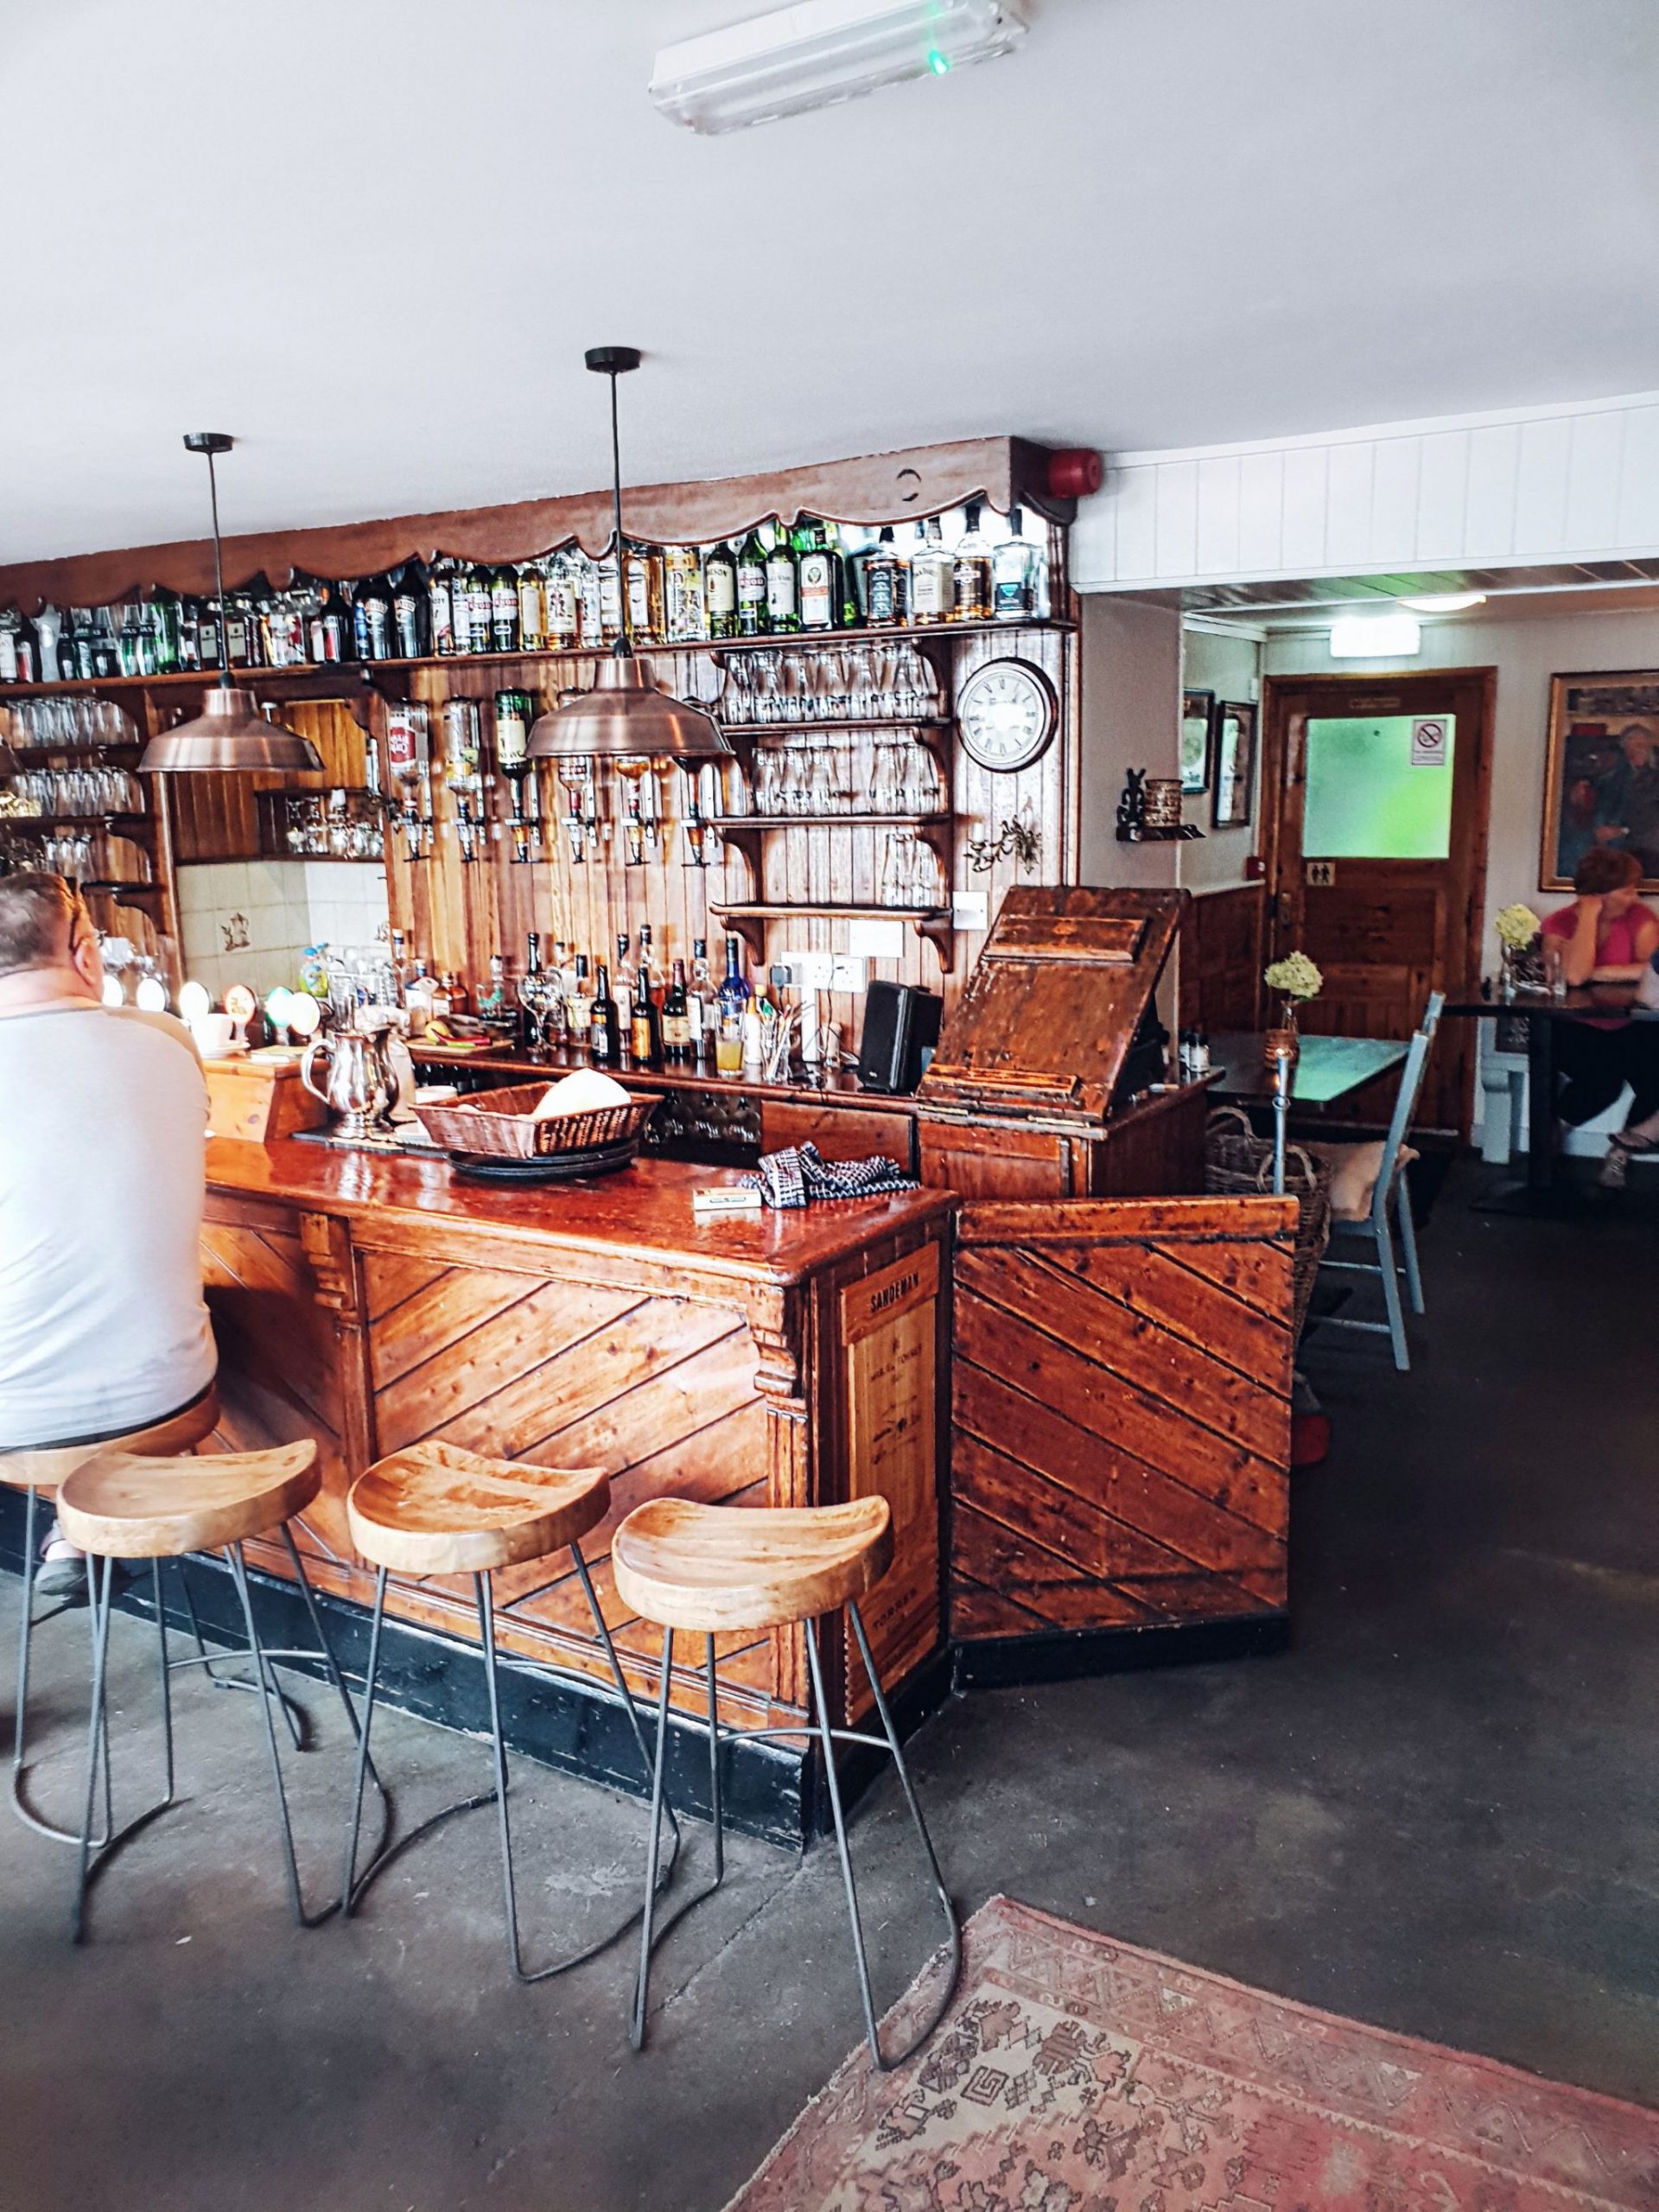 The bar area in Hayes, Glandore